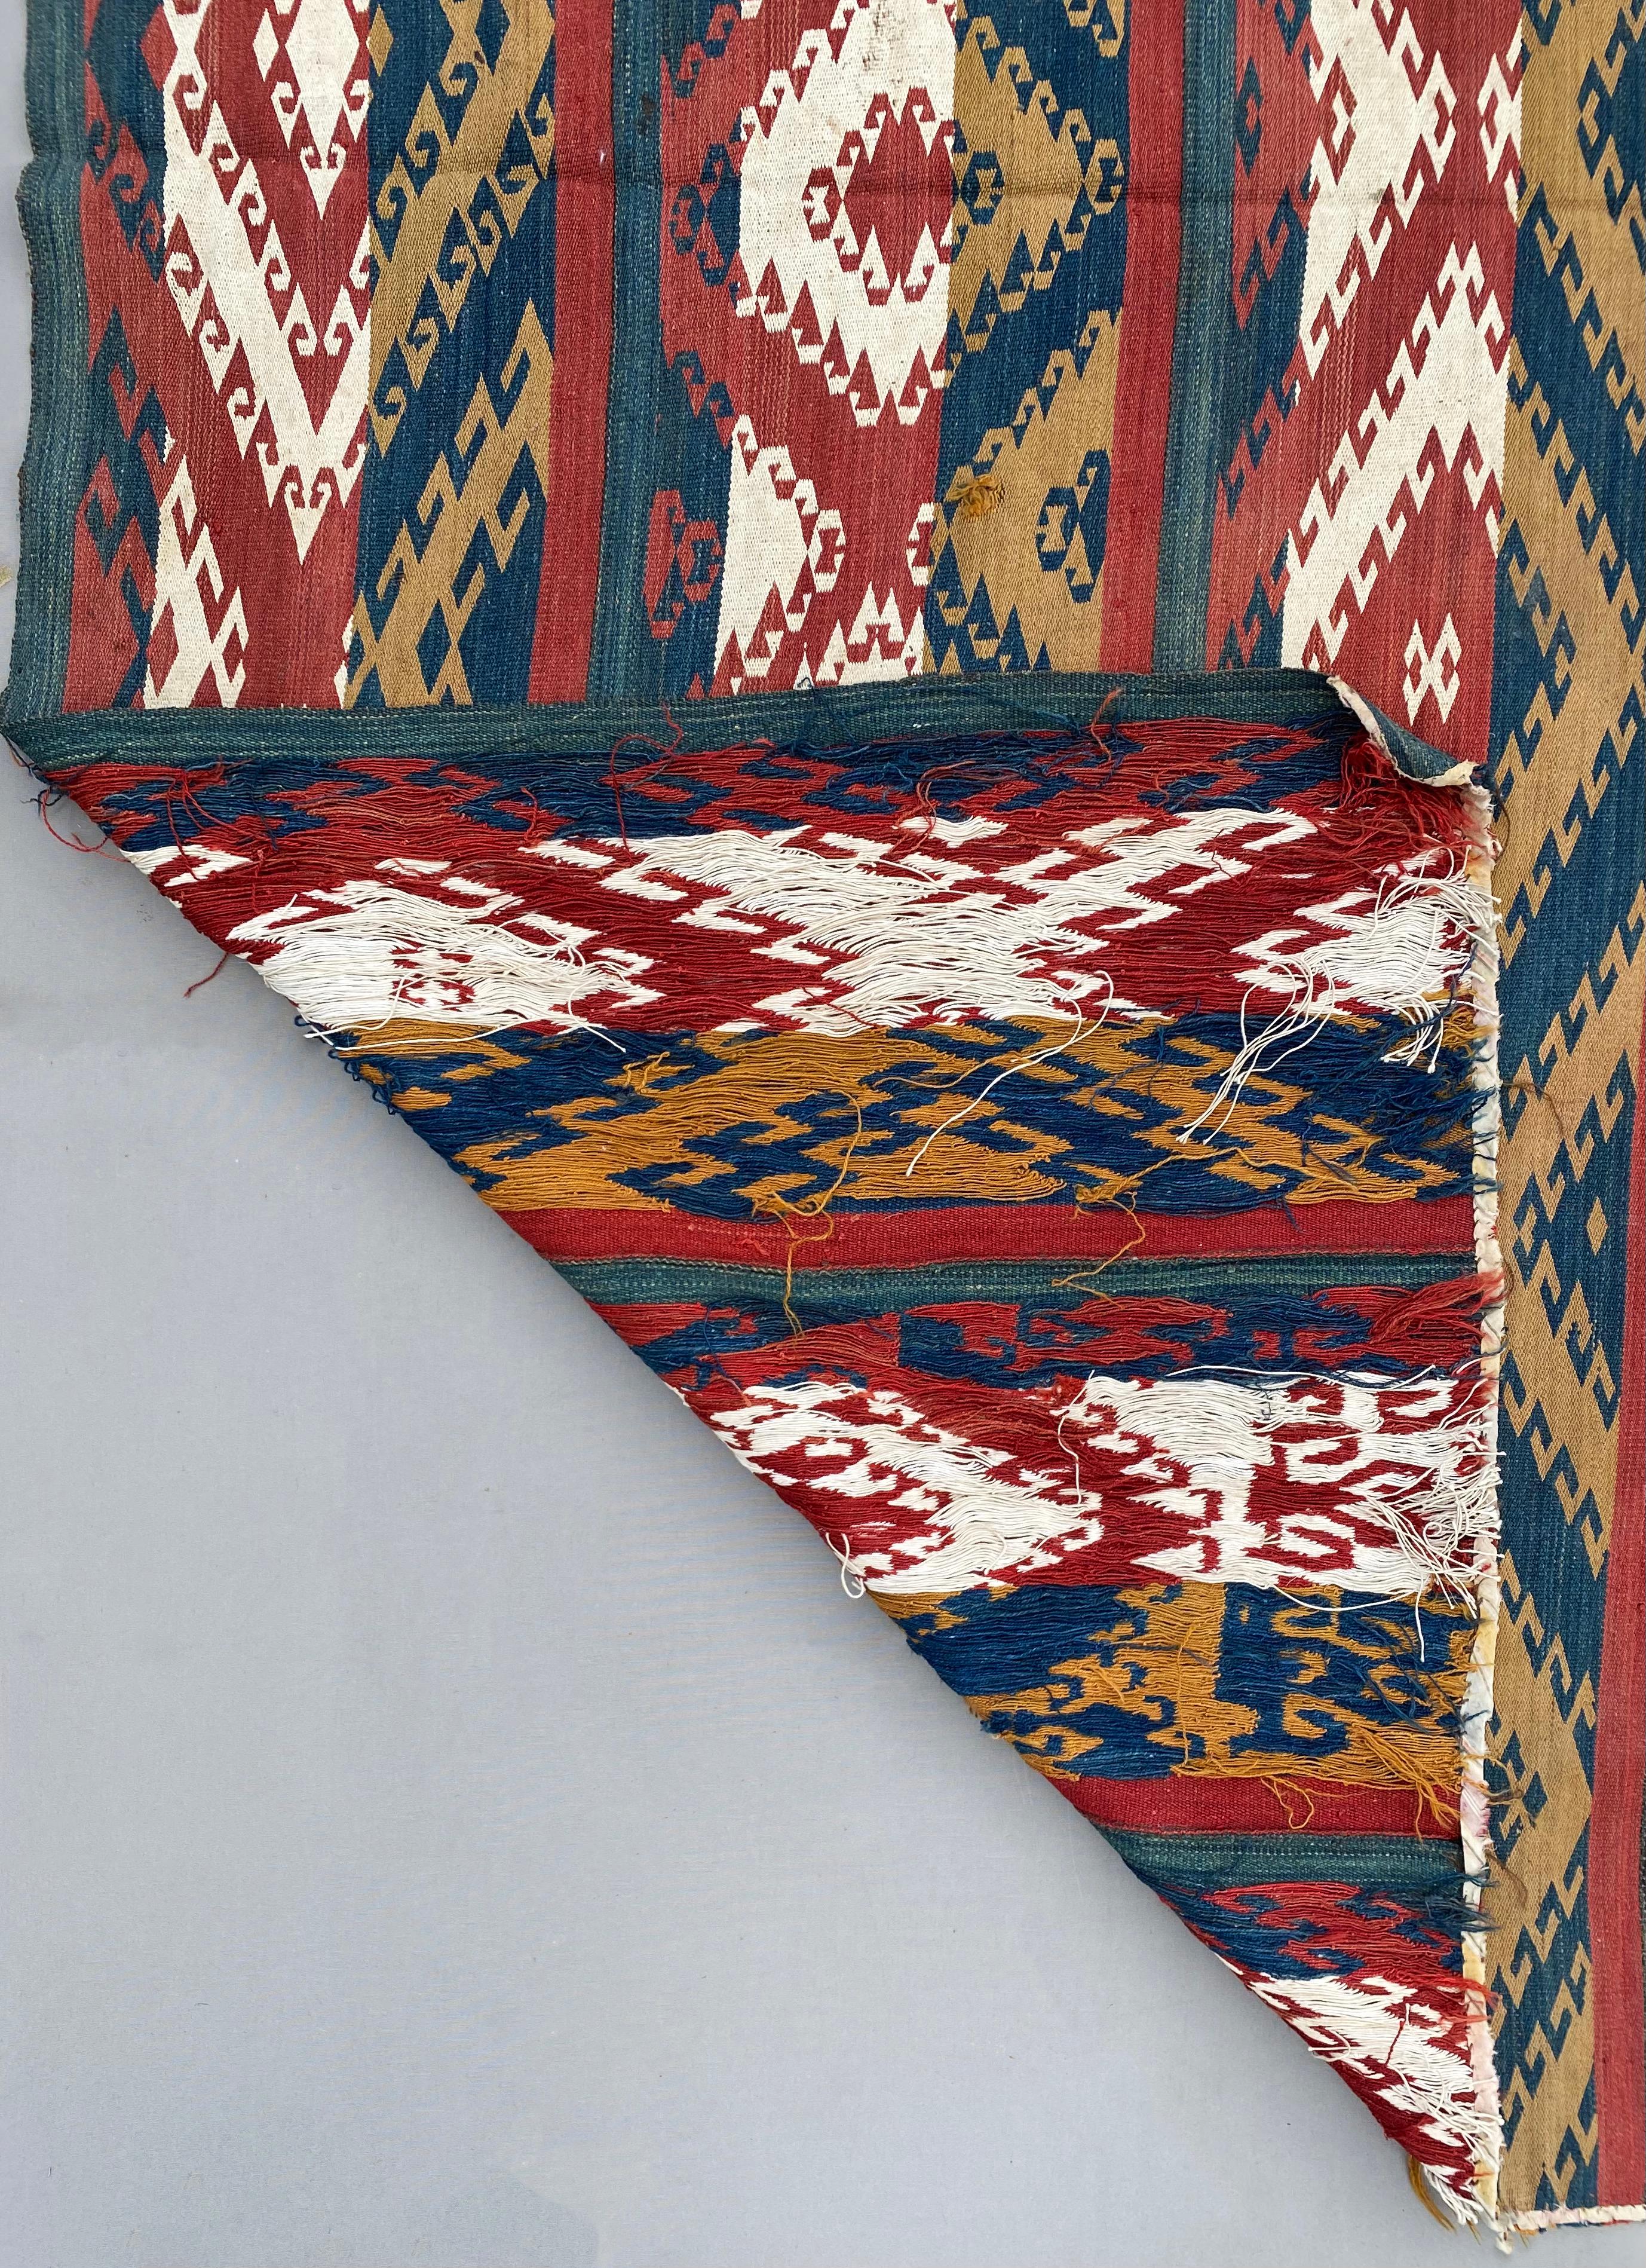 Uzbekistan Ghudjeri Tribal Kilim Rug from Wool, Room Size, Early 20th Century For Sale 3